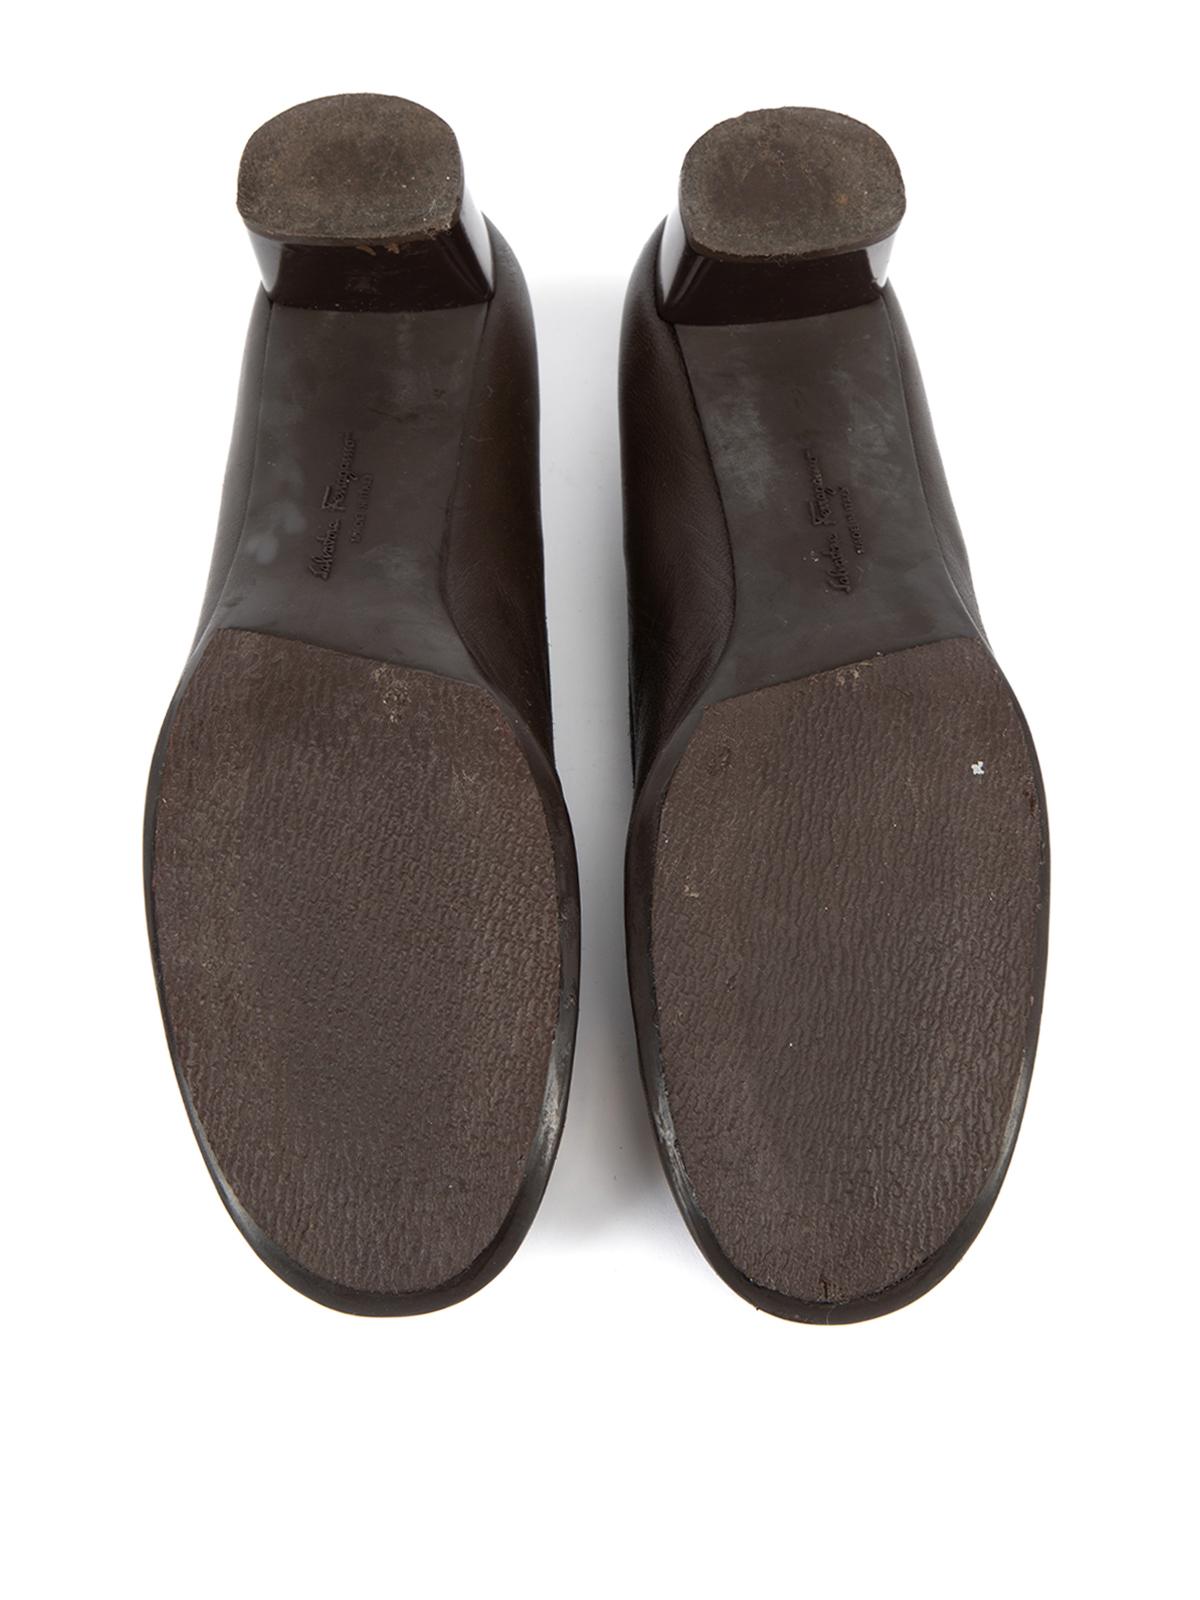 Pre-Loved Salvatore Ferragamo Women's Dark Brown Leather Gold Buckle Block Heels For Sale 3